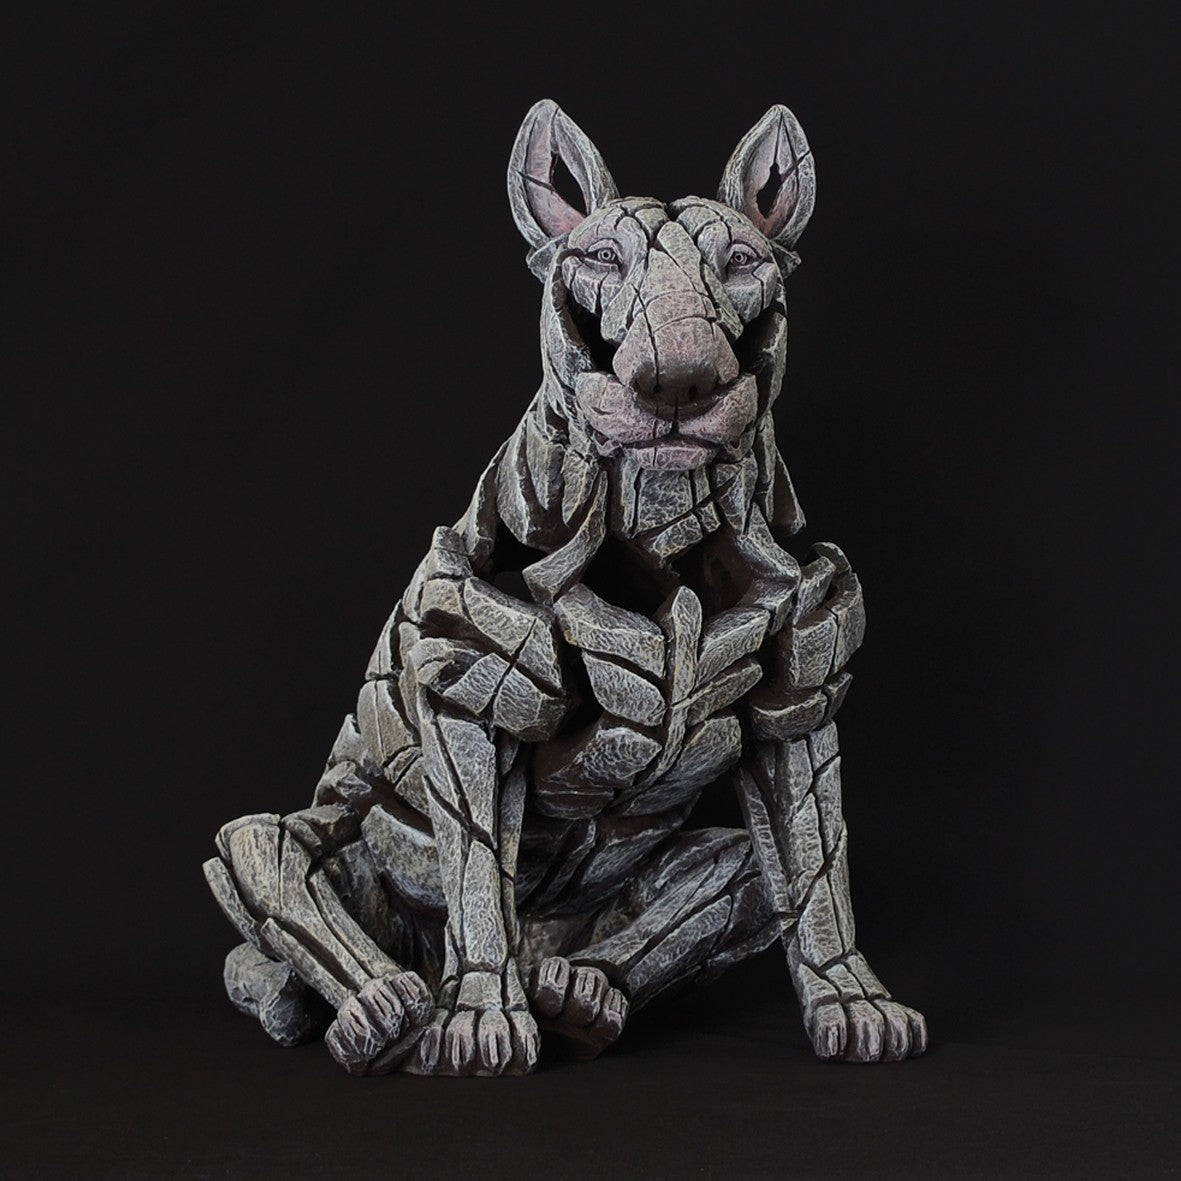 Bull Terrier White sculpture from Edge Sculpture